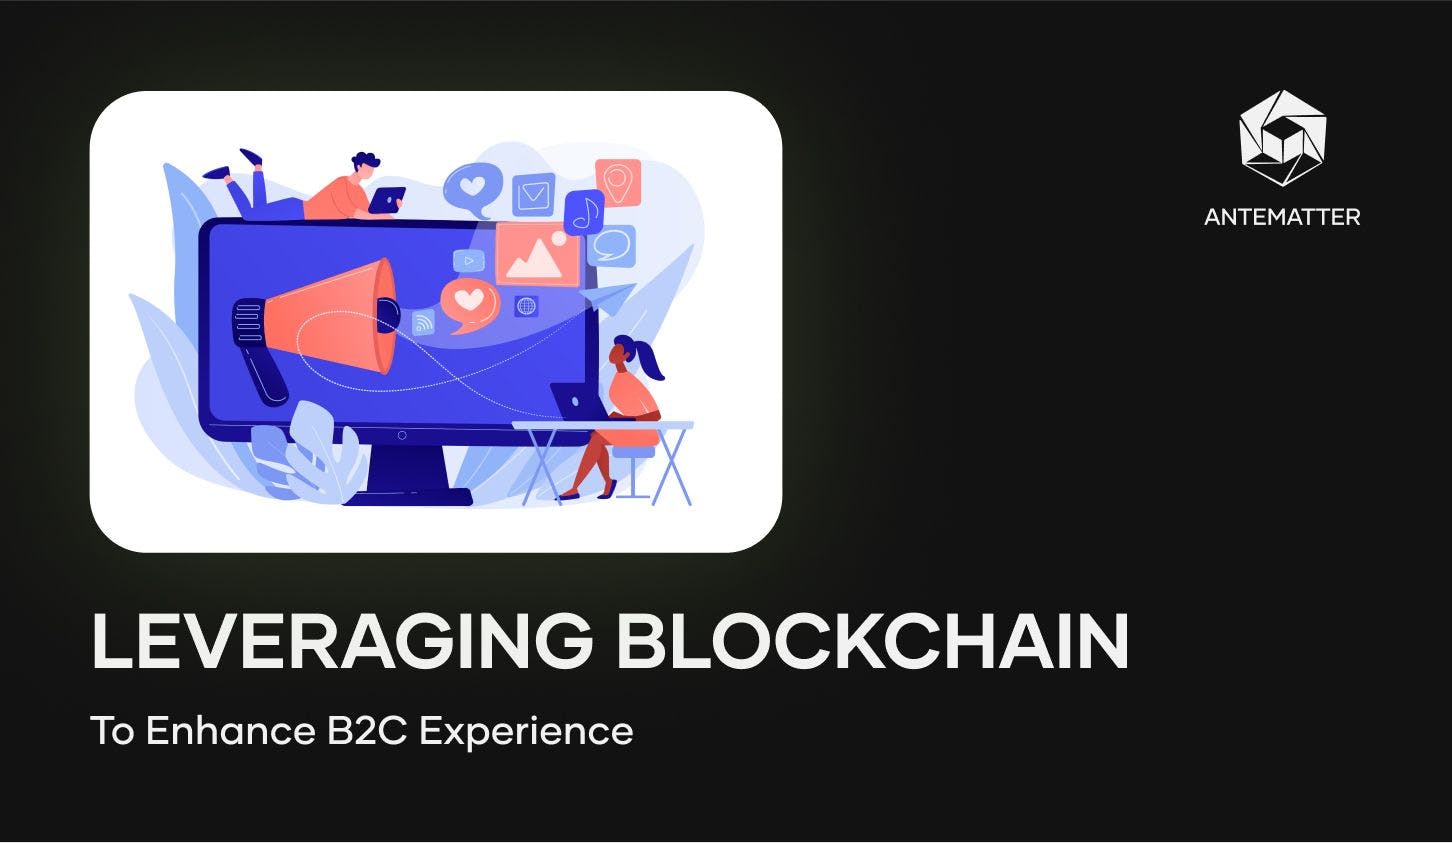 Leveraging Blockchain to enhance B2C experience